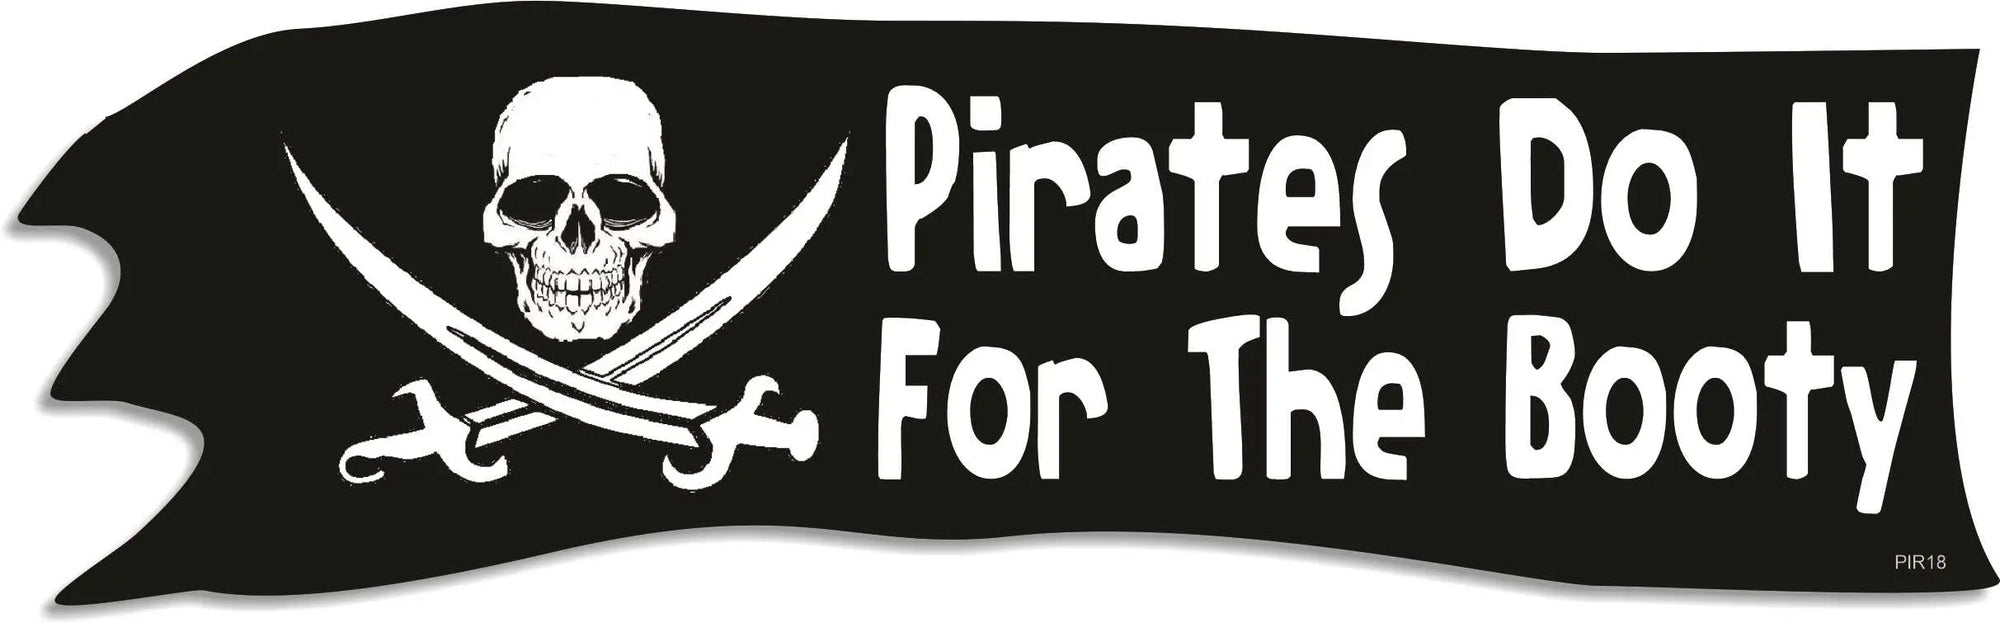 Pirates Do It For The Booty - Pirate Bumper Sticker Humper Bumper